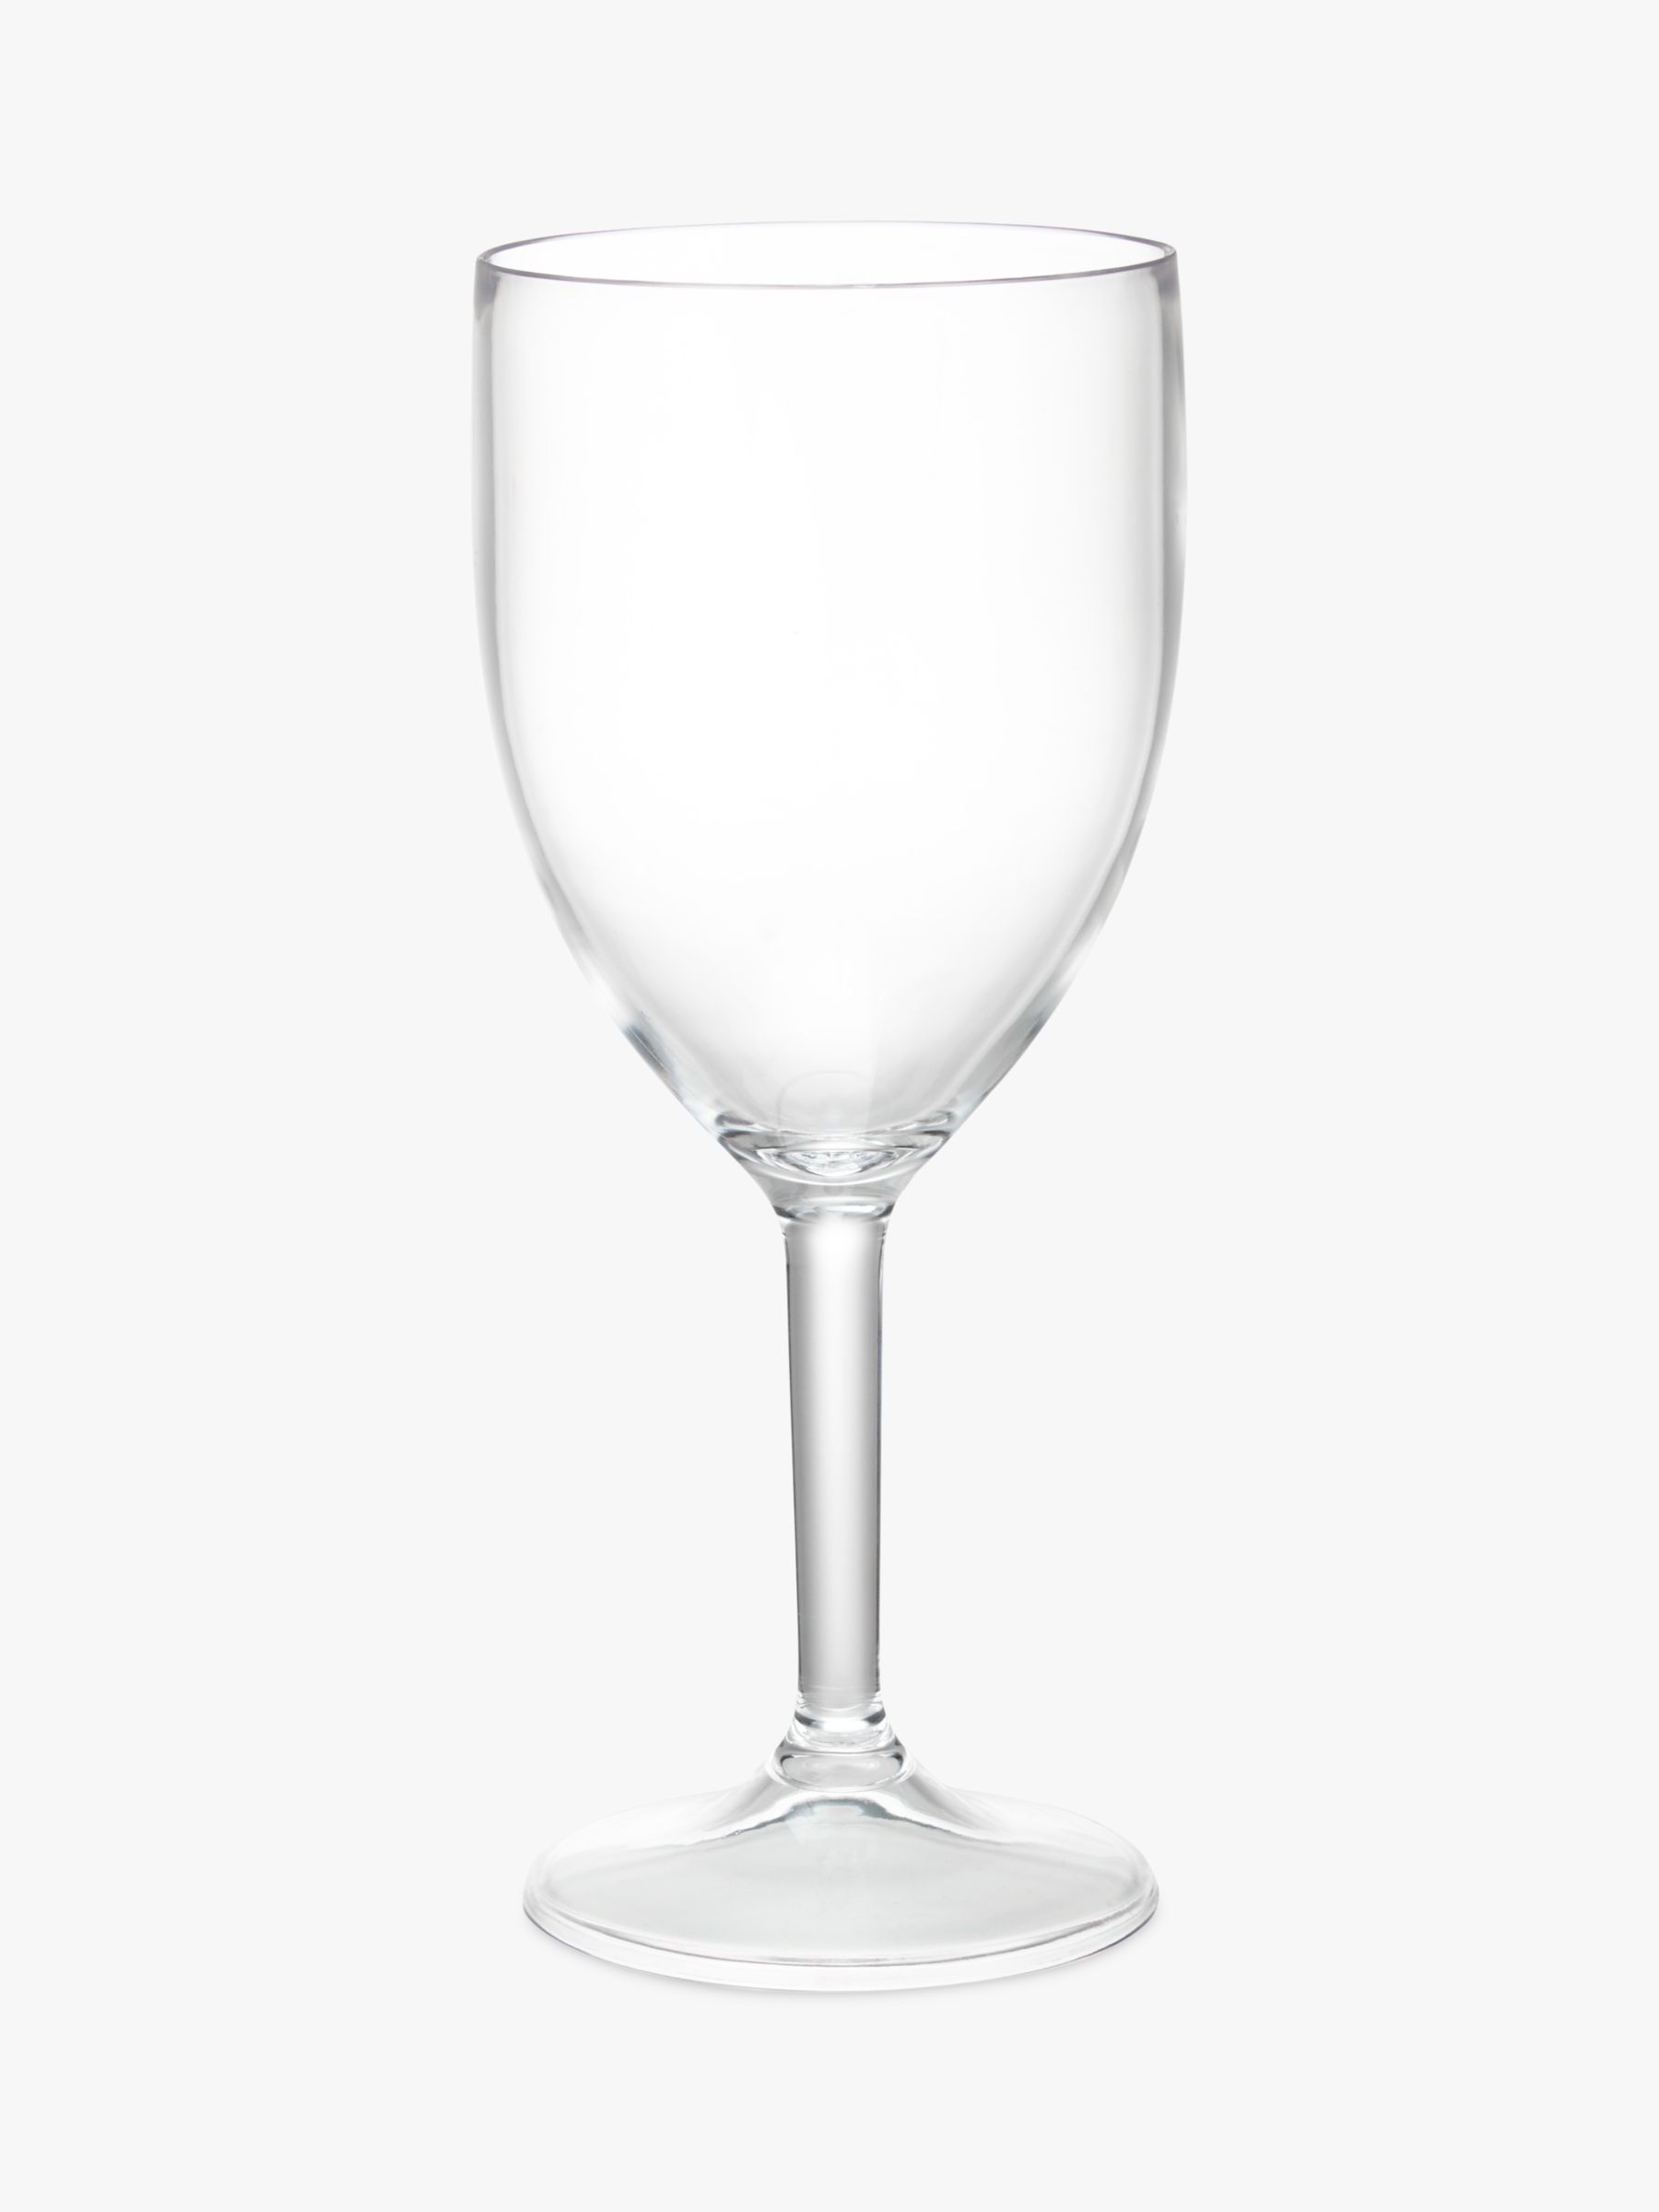 nice plastic wine glasses for wedding